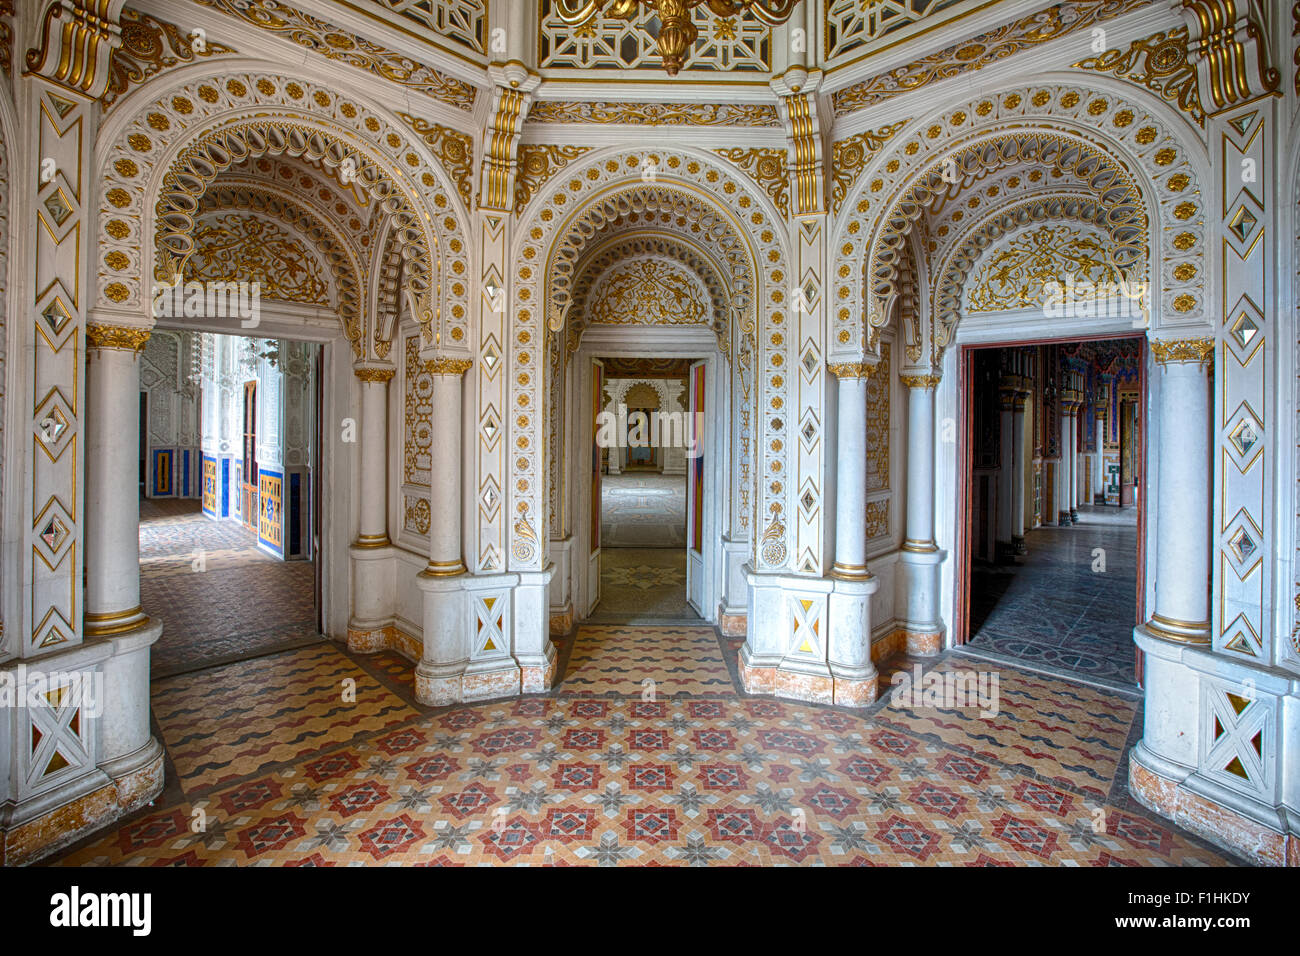 Moorish style palace interior architecture Stock Photo